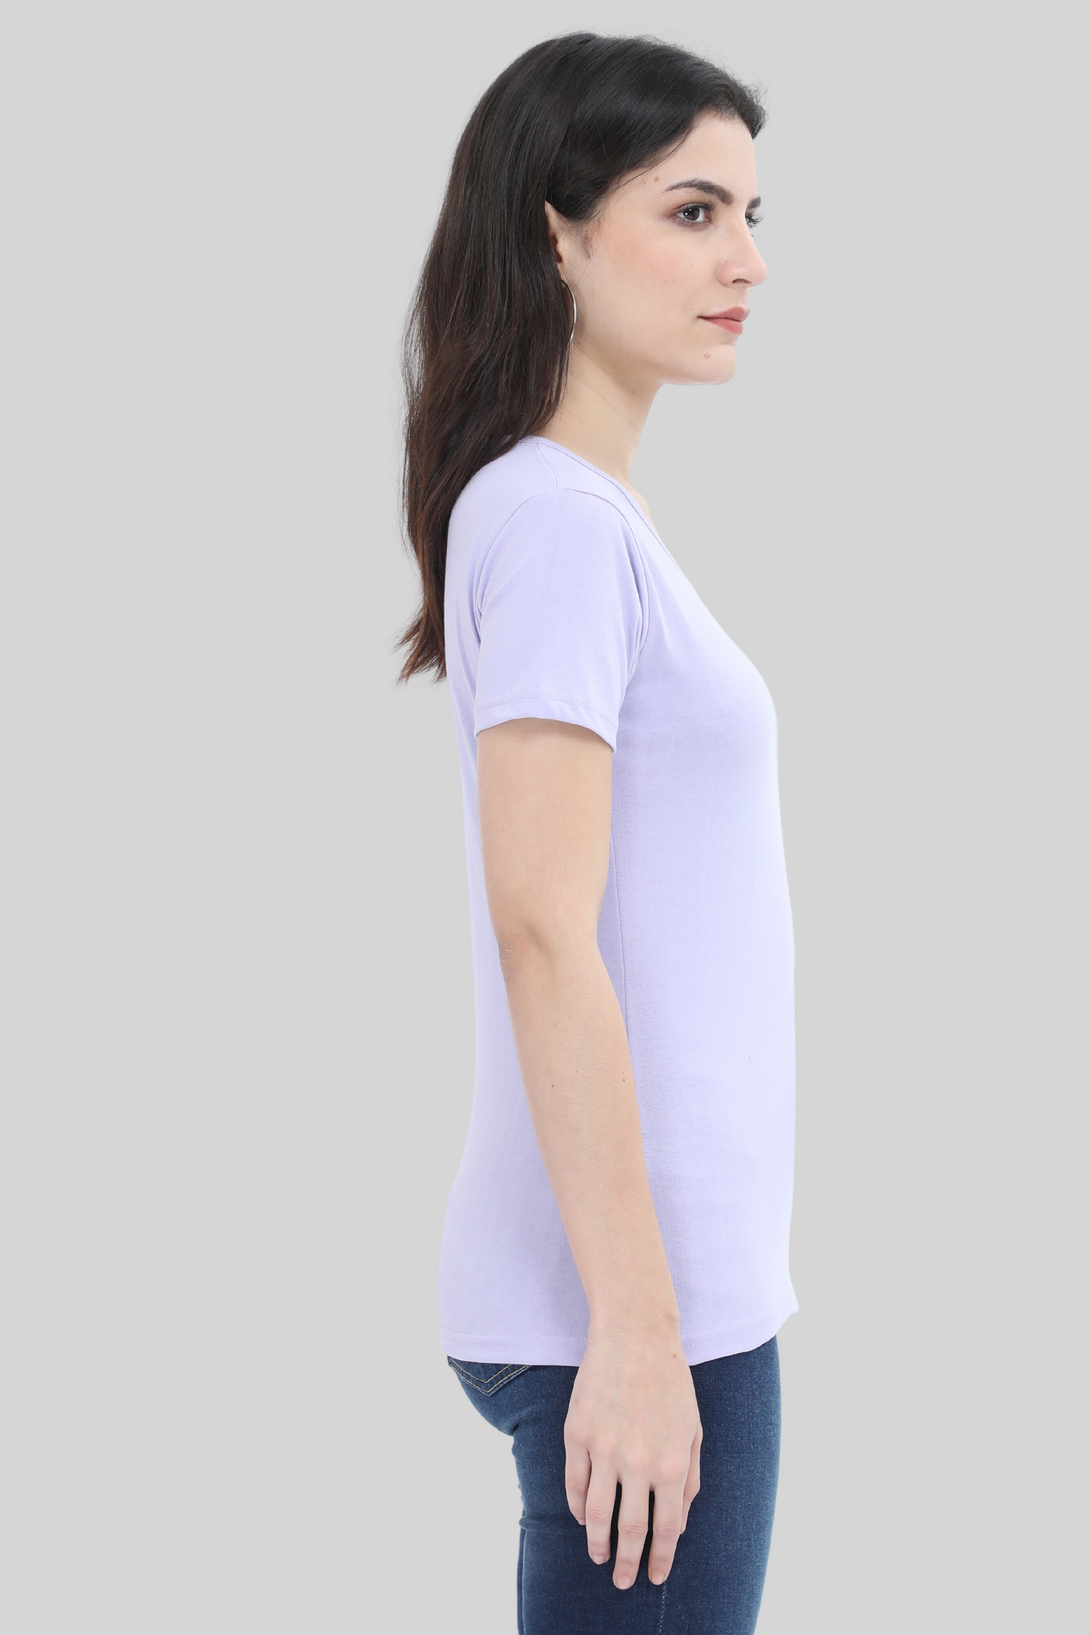 Lavender Scoop Neck T-Shirt For Women - WowWaves